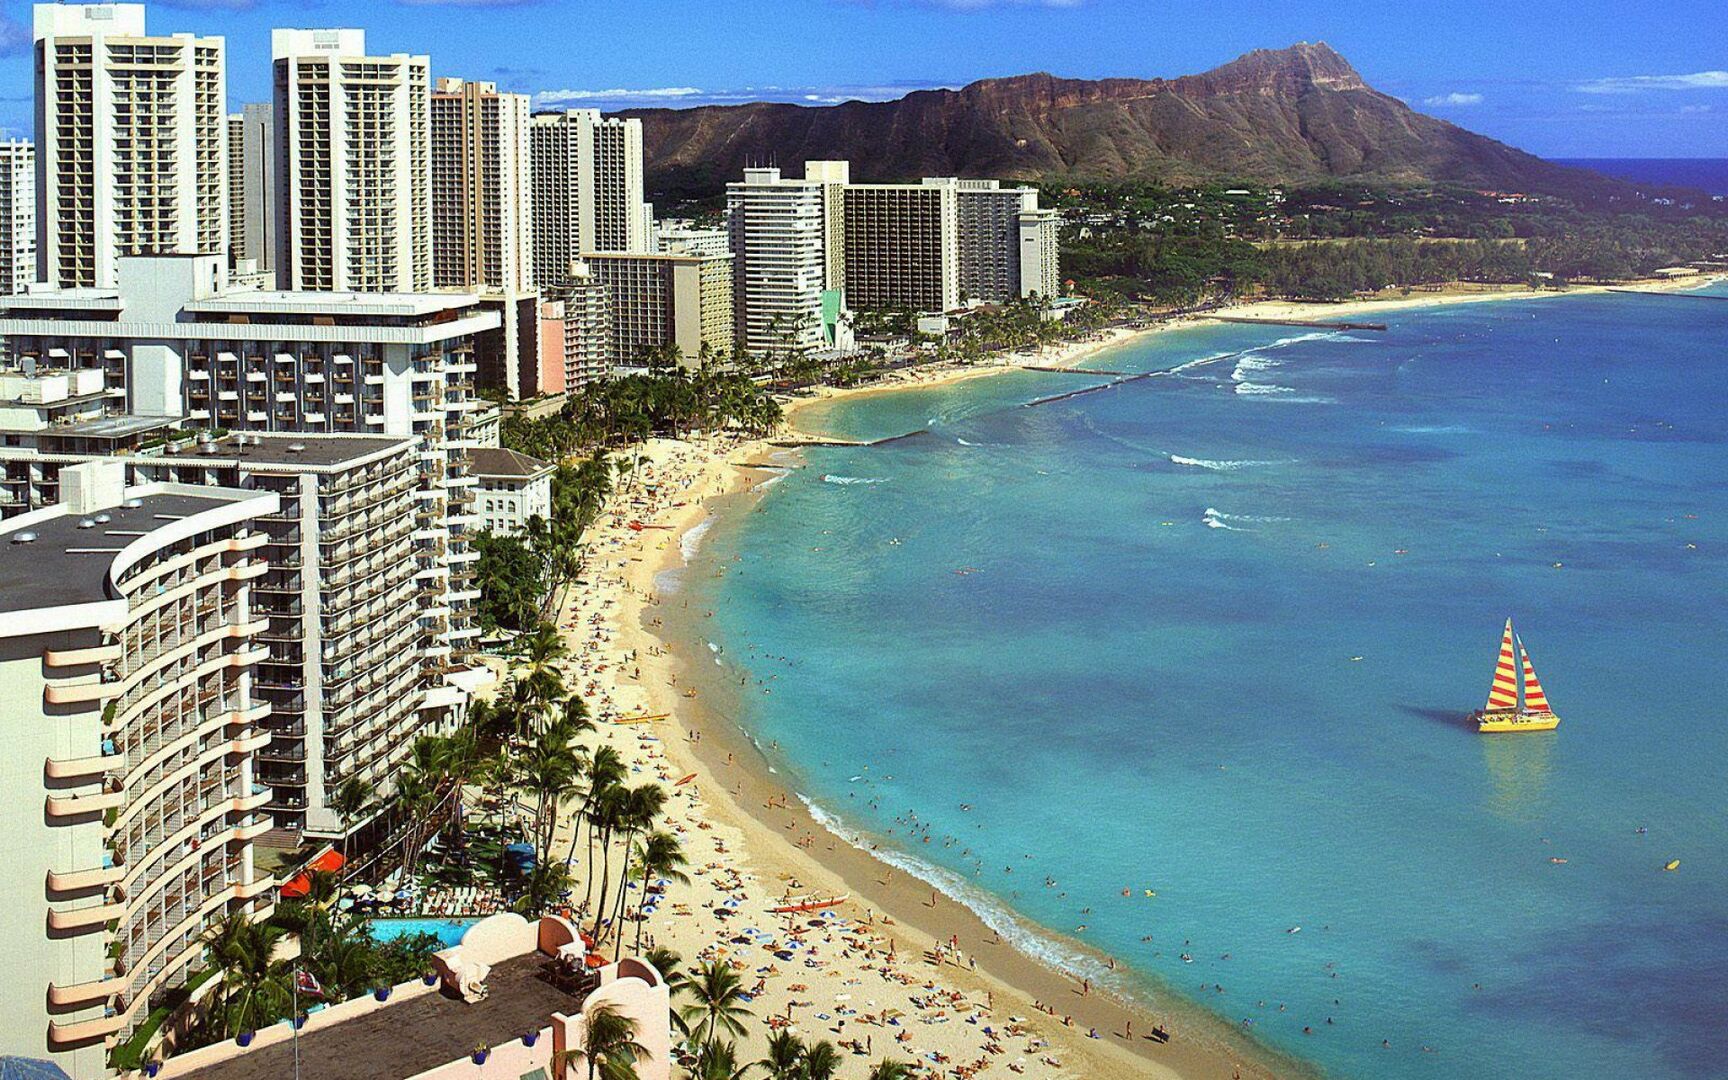 Waikiki beach and Diamond Head